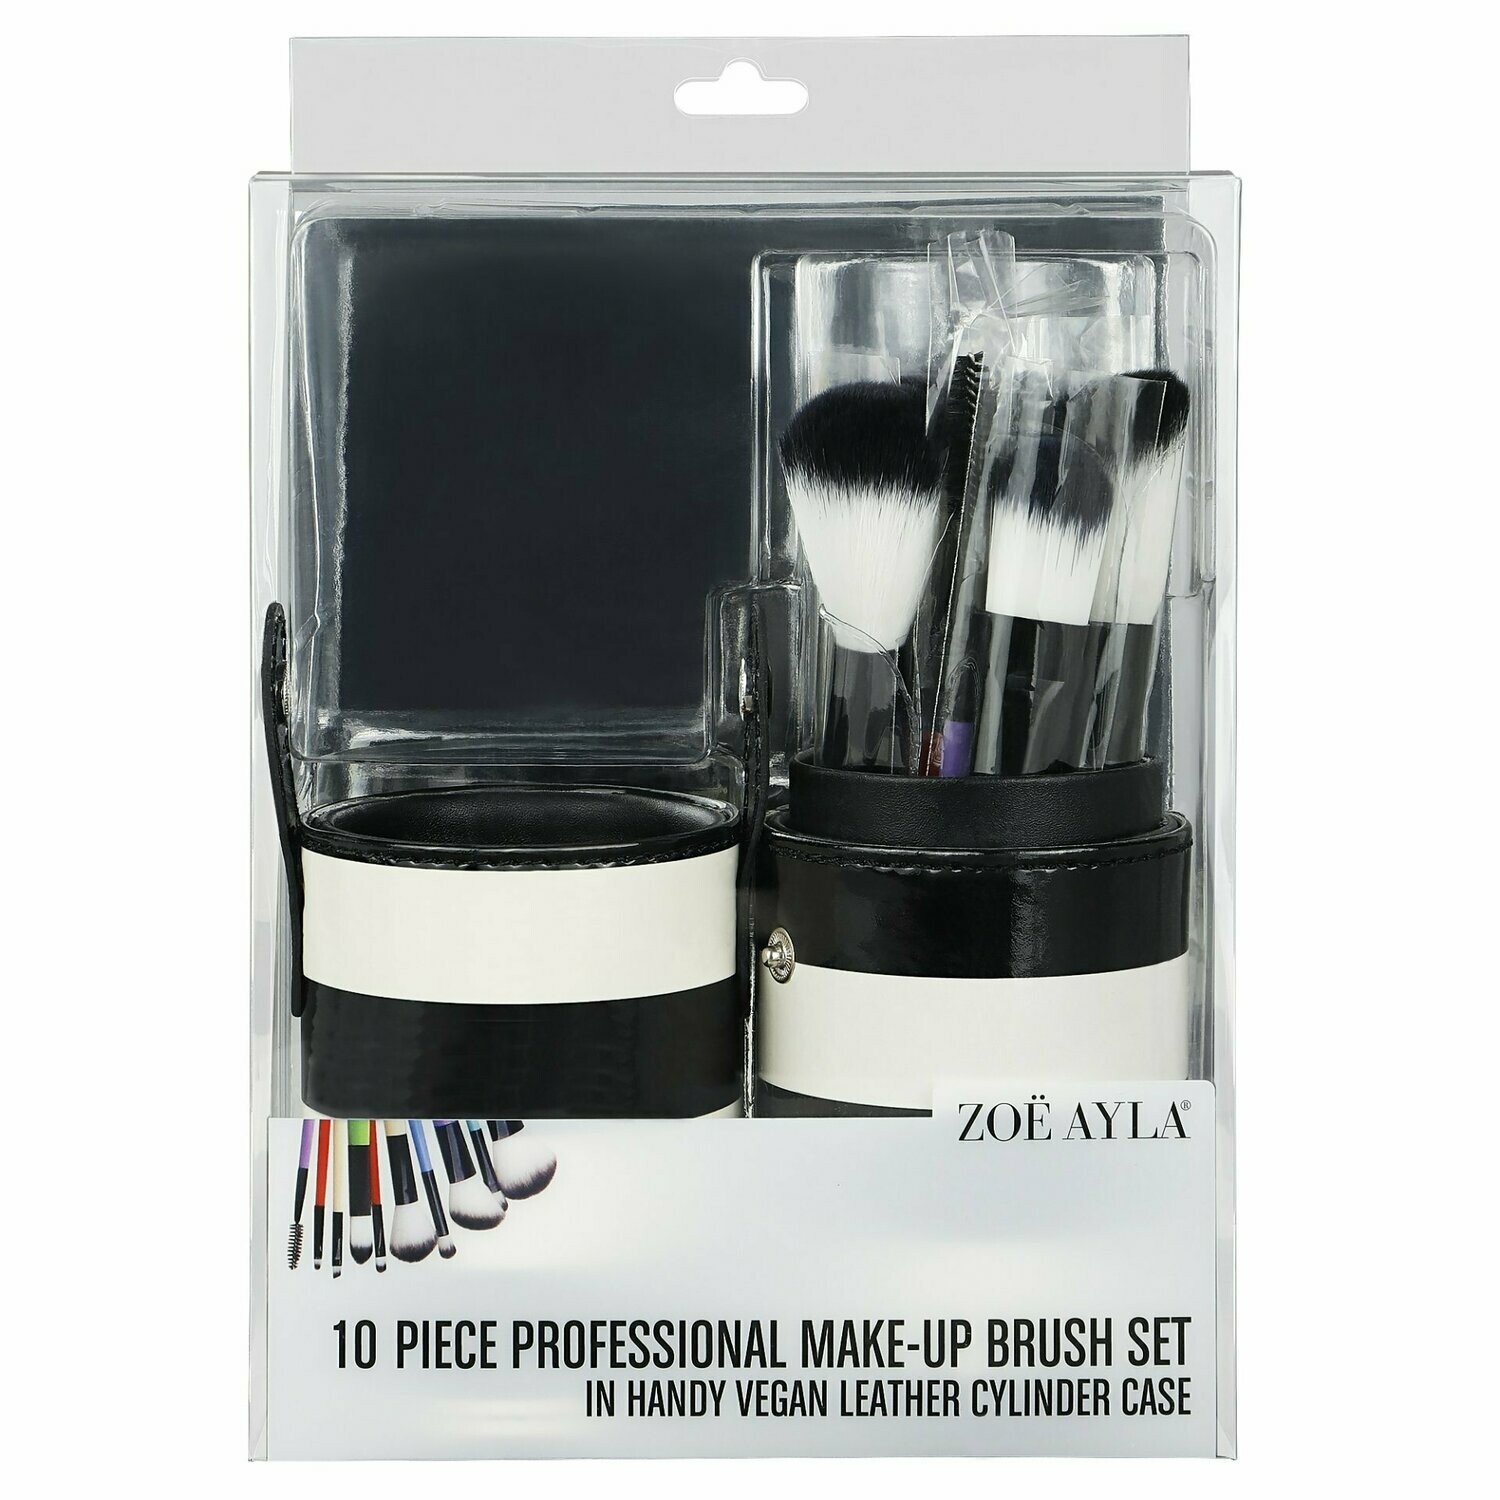 10 Piece Professional Make-up Brush Set